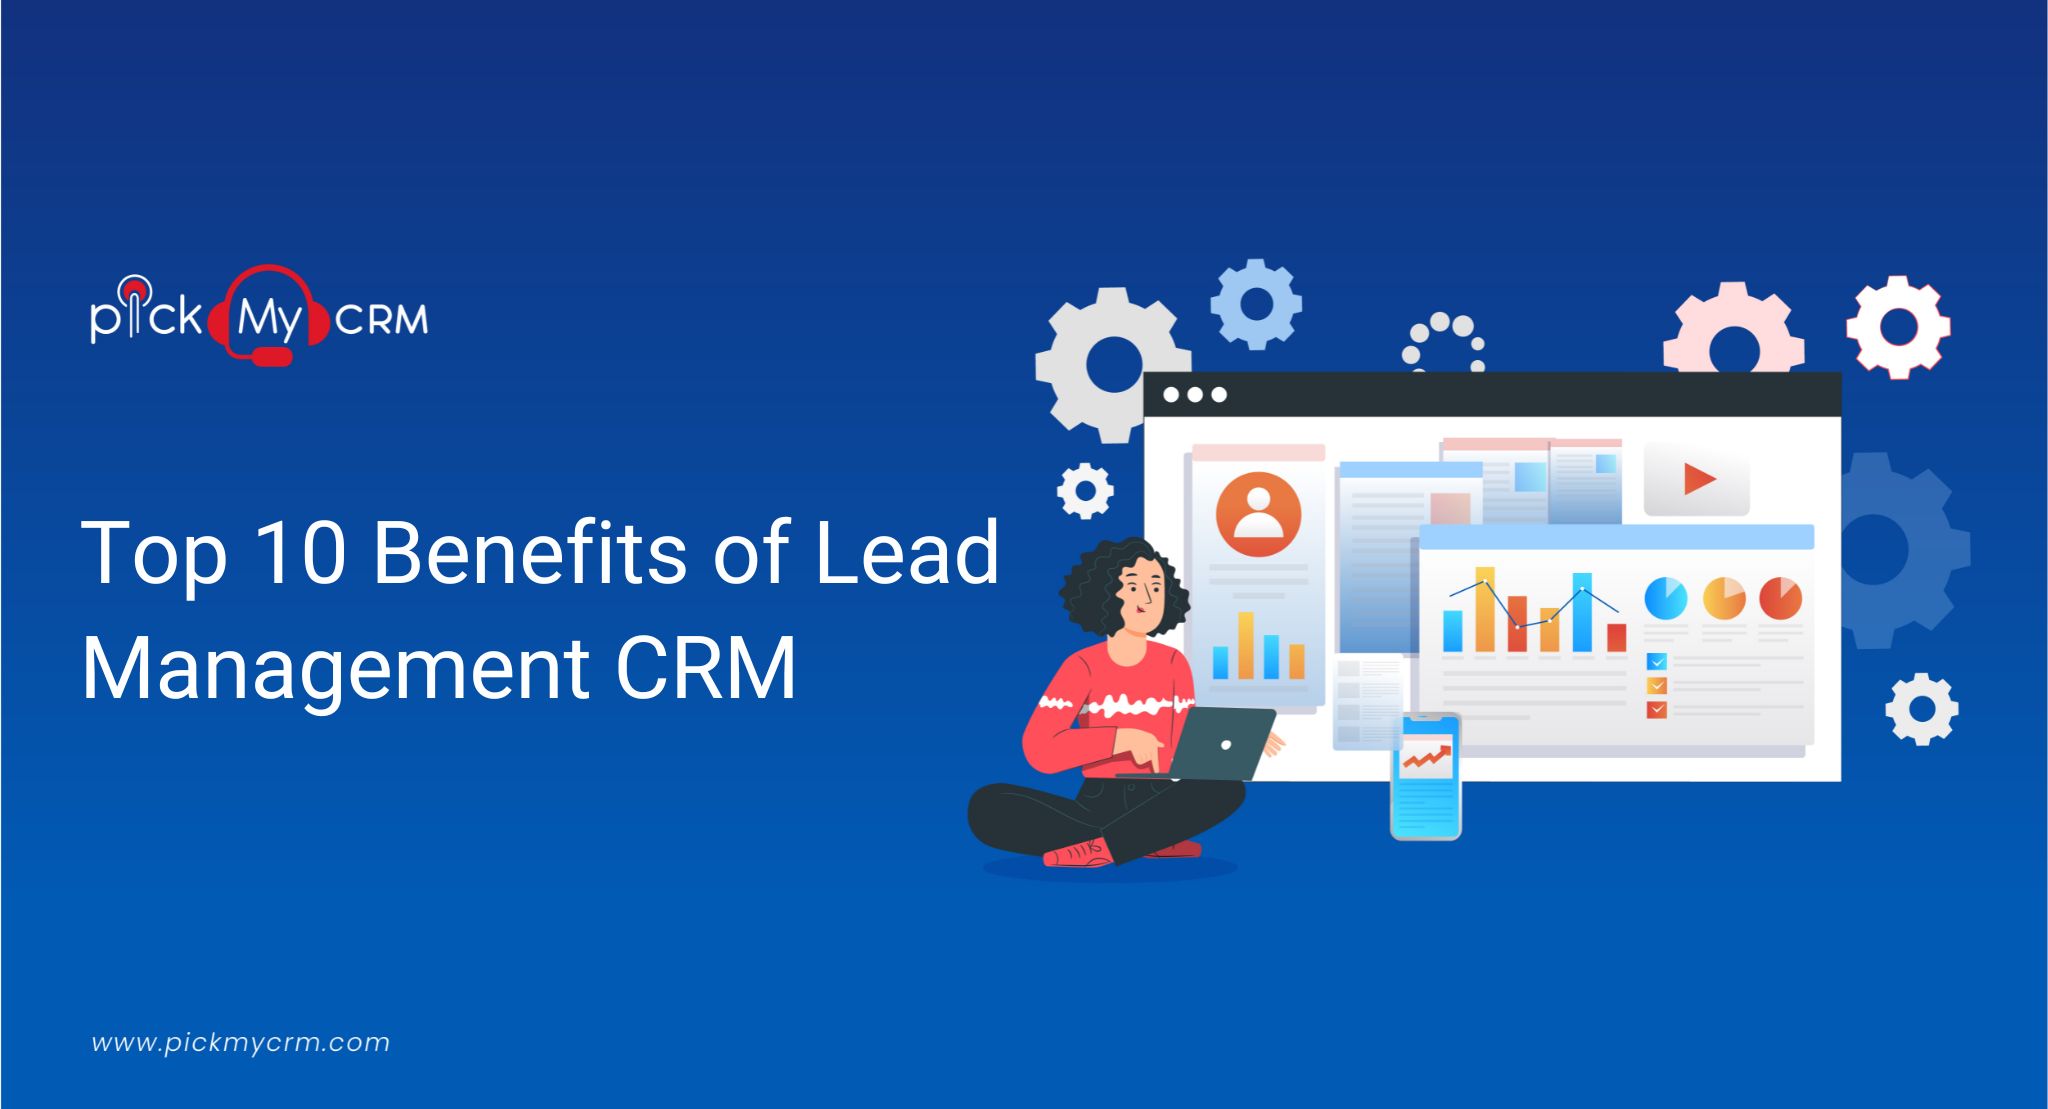 Benefits of Lead Management CRM